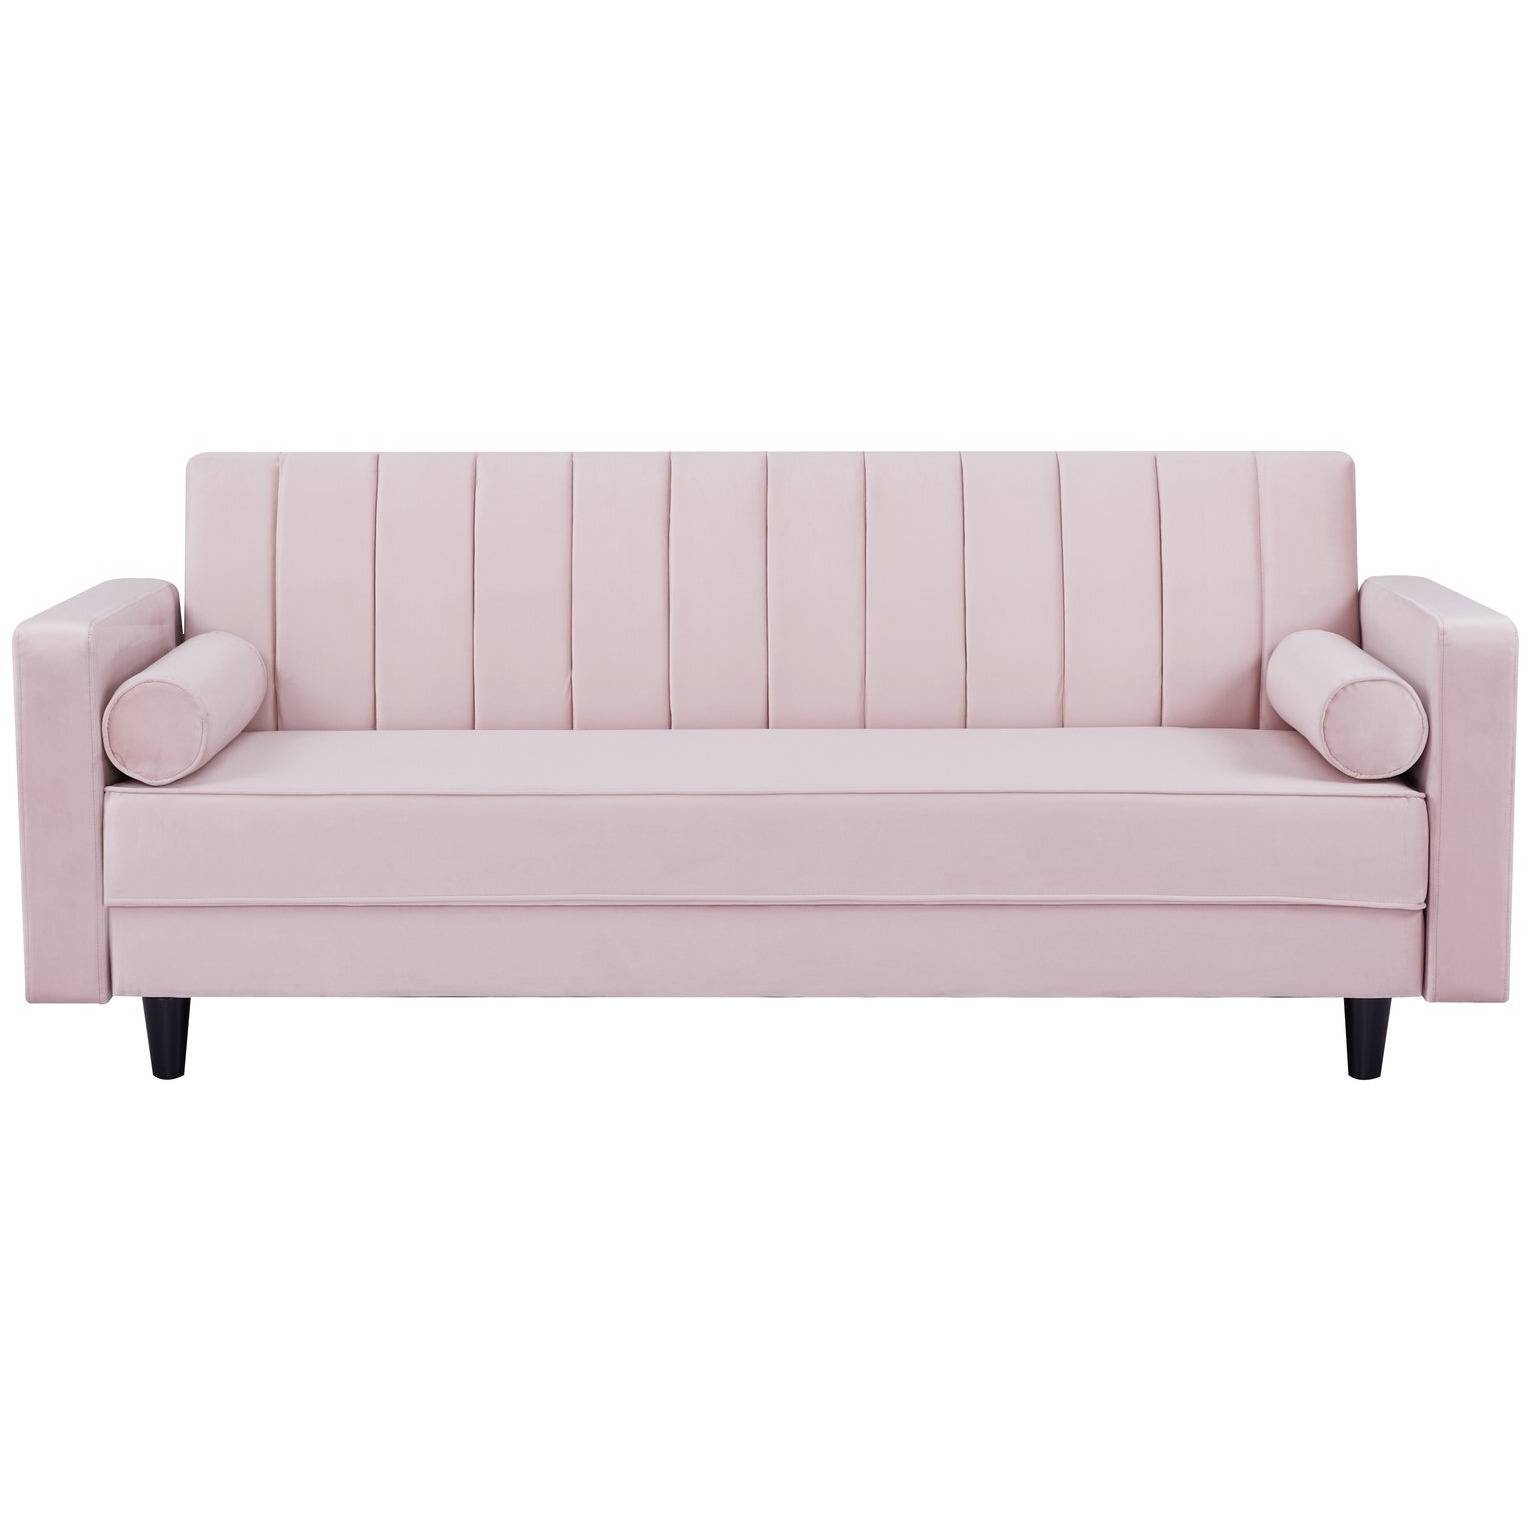 Habitat Preston Velvet 3 Seater Clic Clac Sofa Bed - Pink - image 1